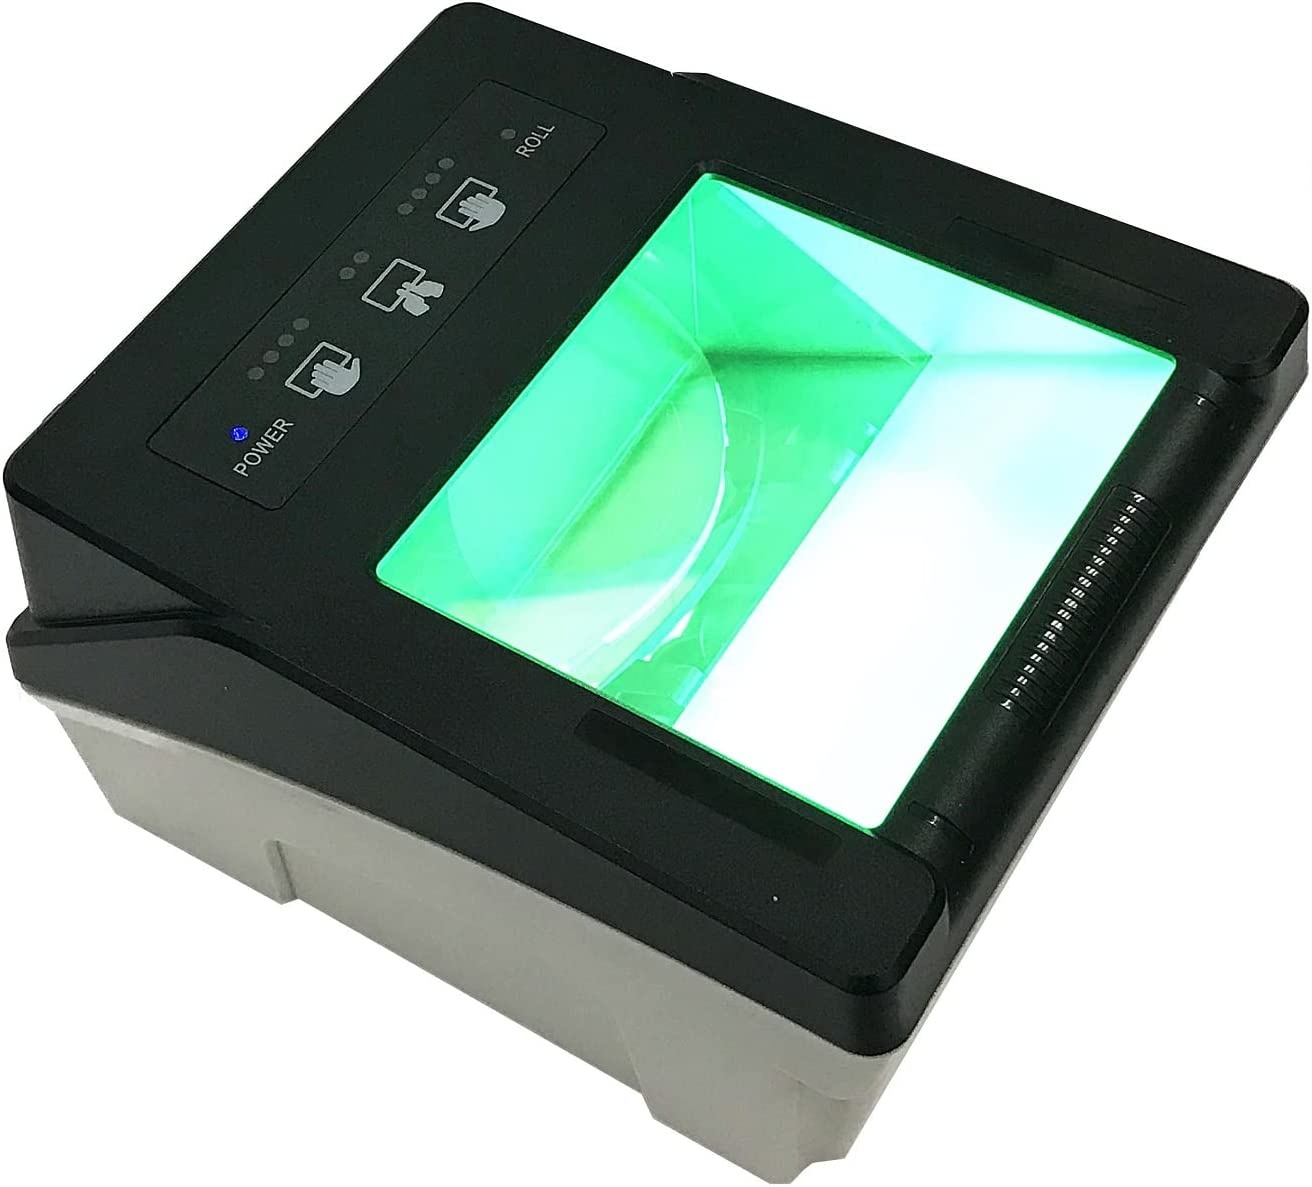 YUUSFJI JYDF500 Fingerprint Reader Livescanner Ultra-Thin Optical Four-Finger Fingerprint Collector The Smallest and Most Compact Scanner